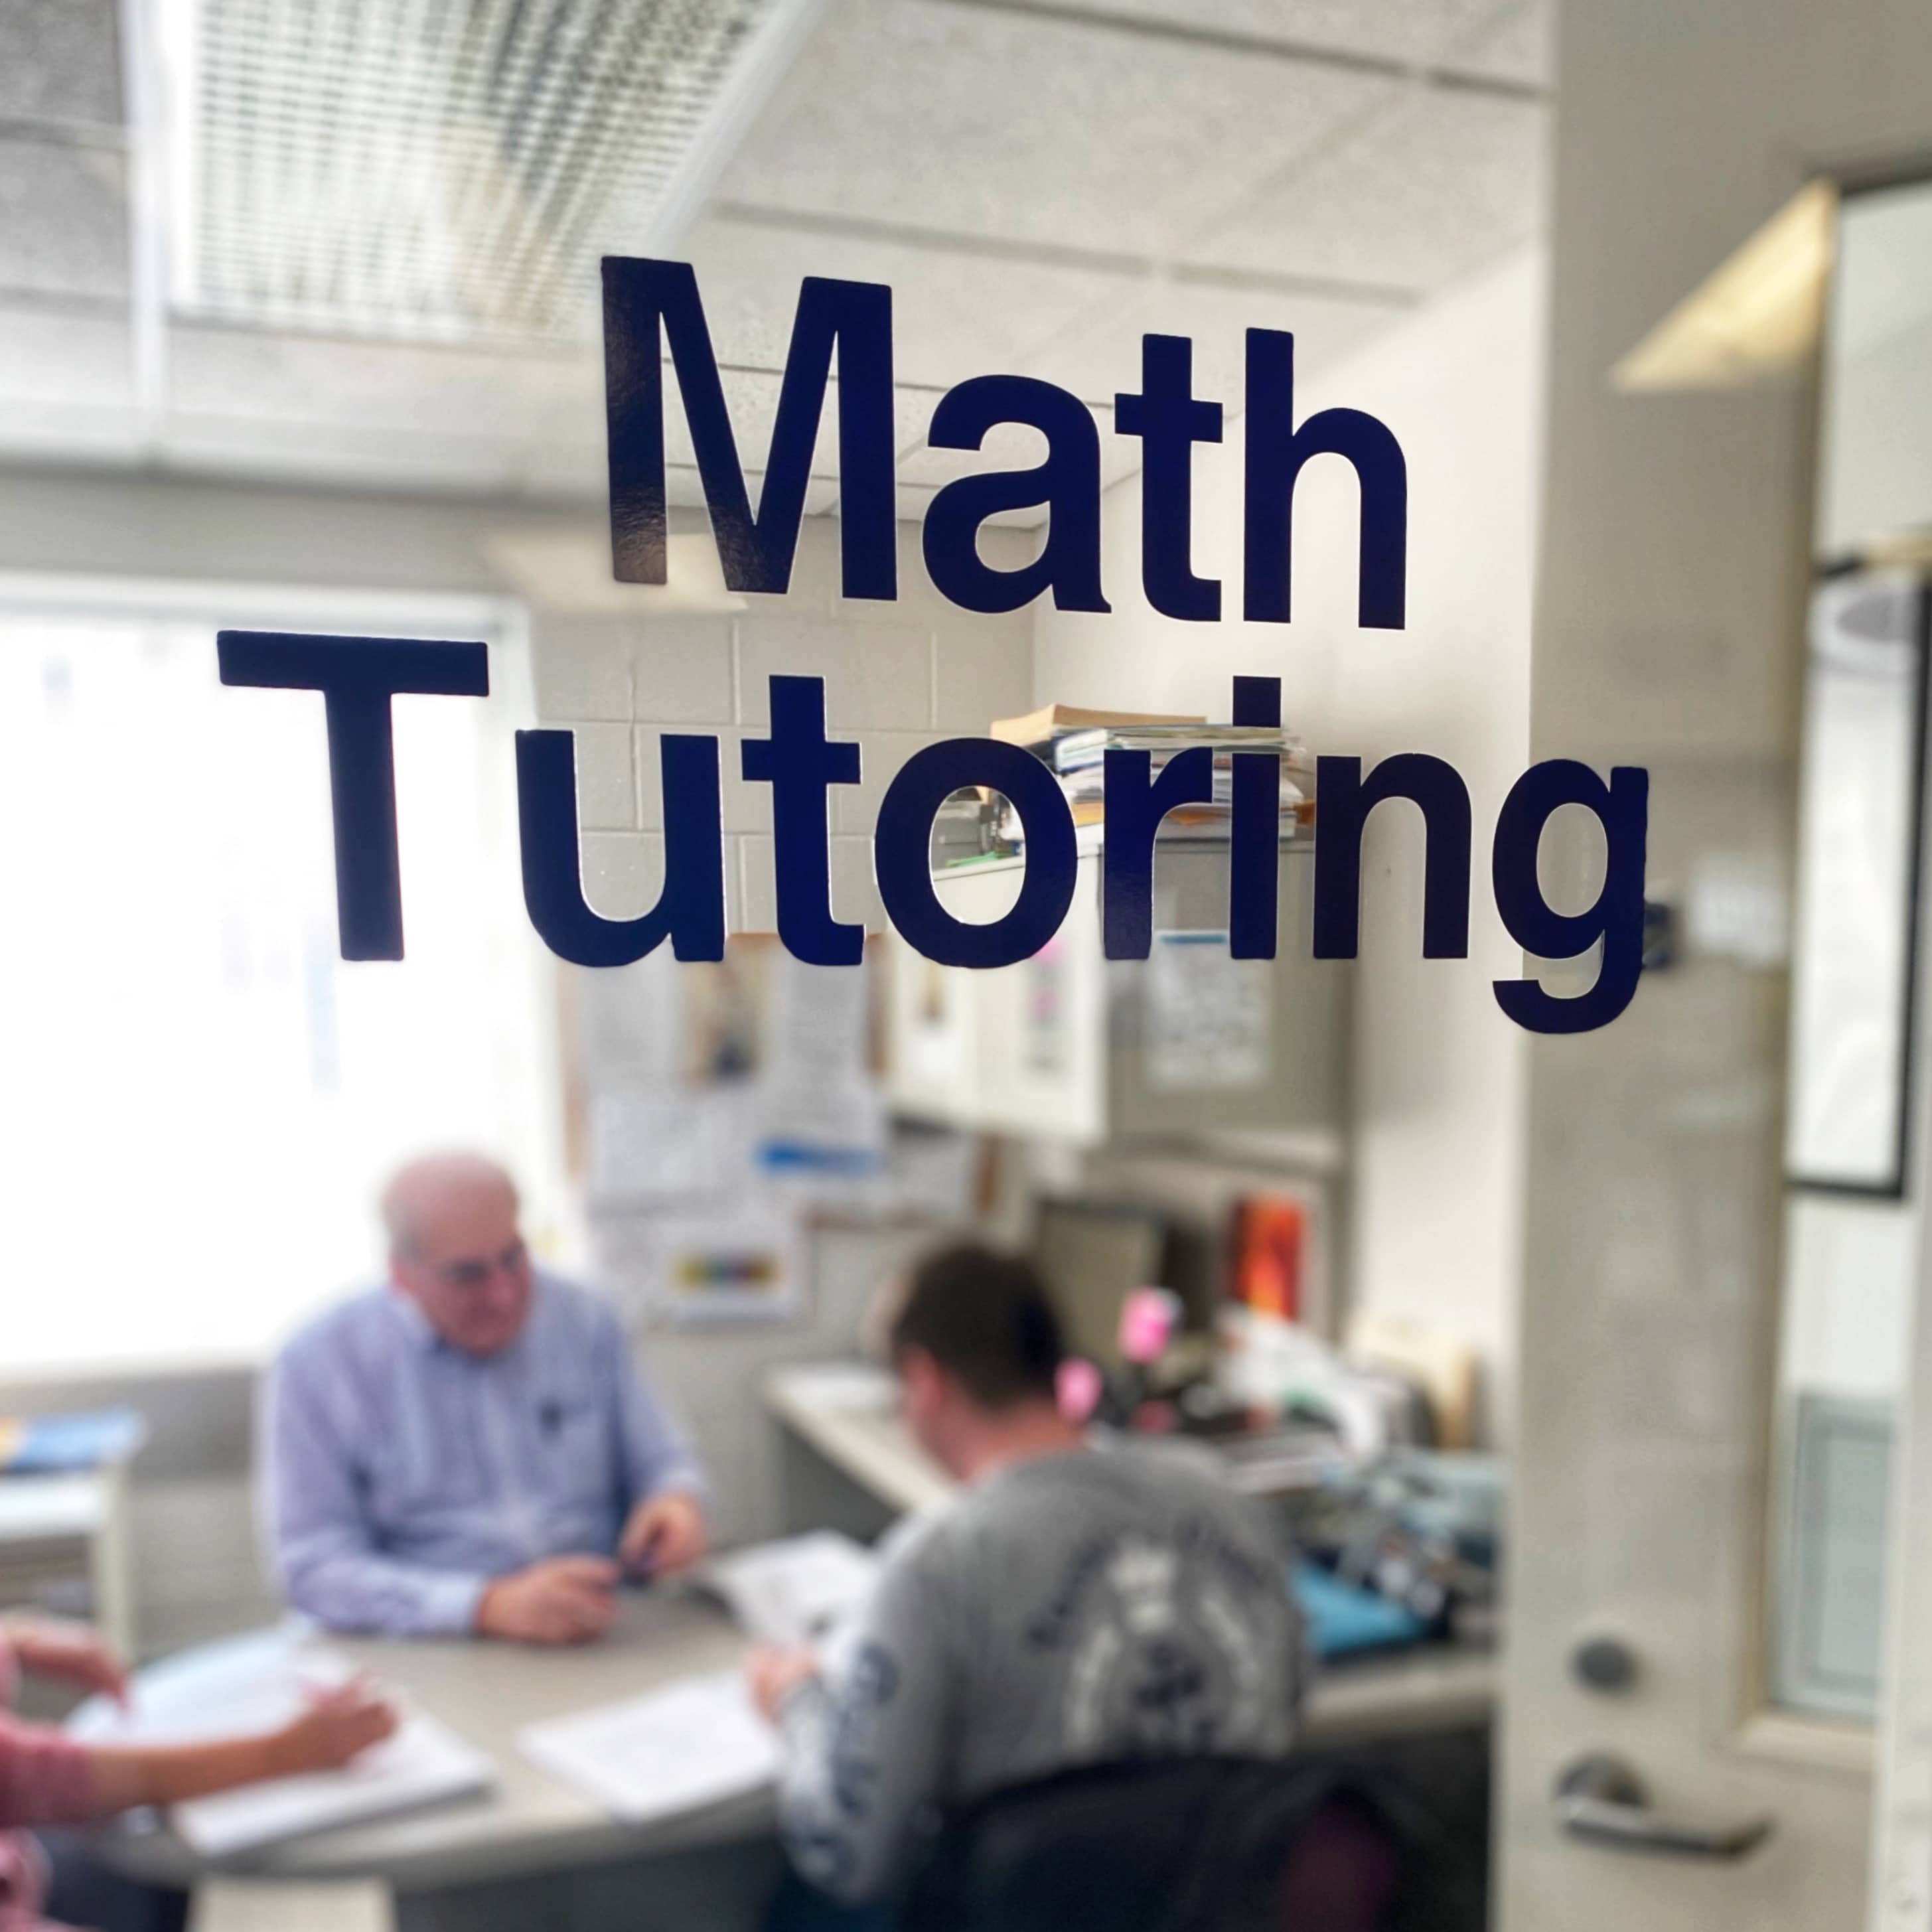 Math tutoring office